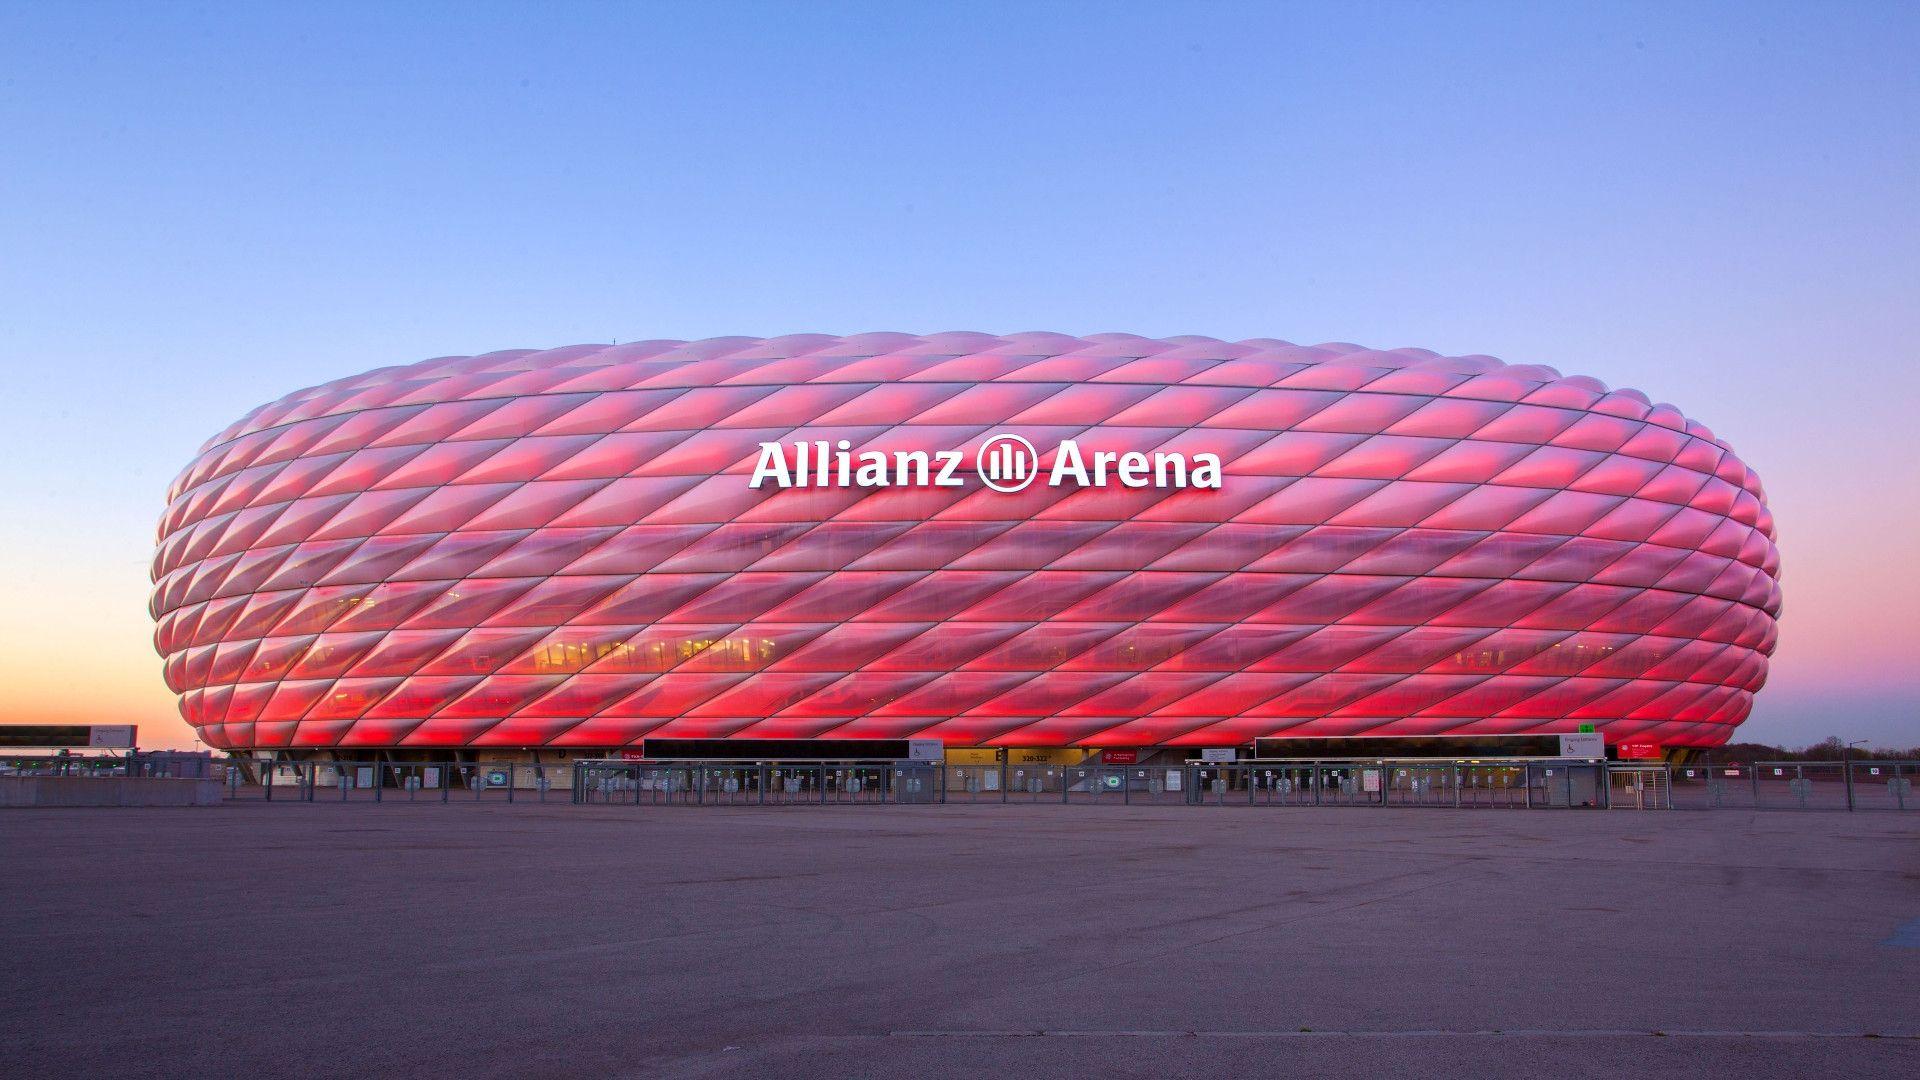 1920x1080 hình nền - Allianz Arena (EN)